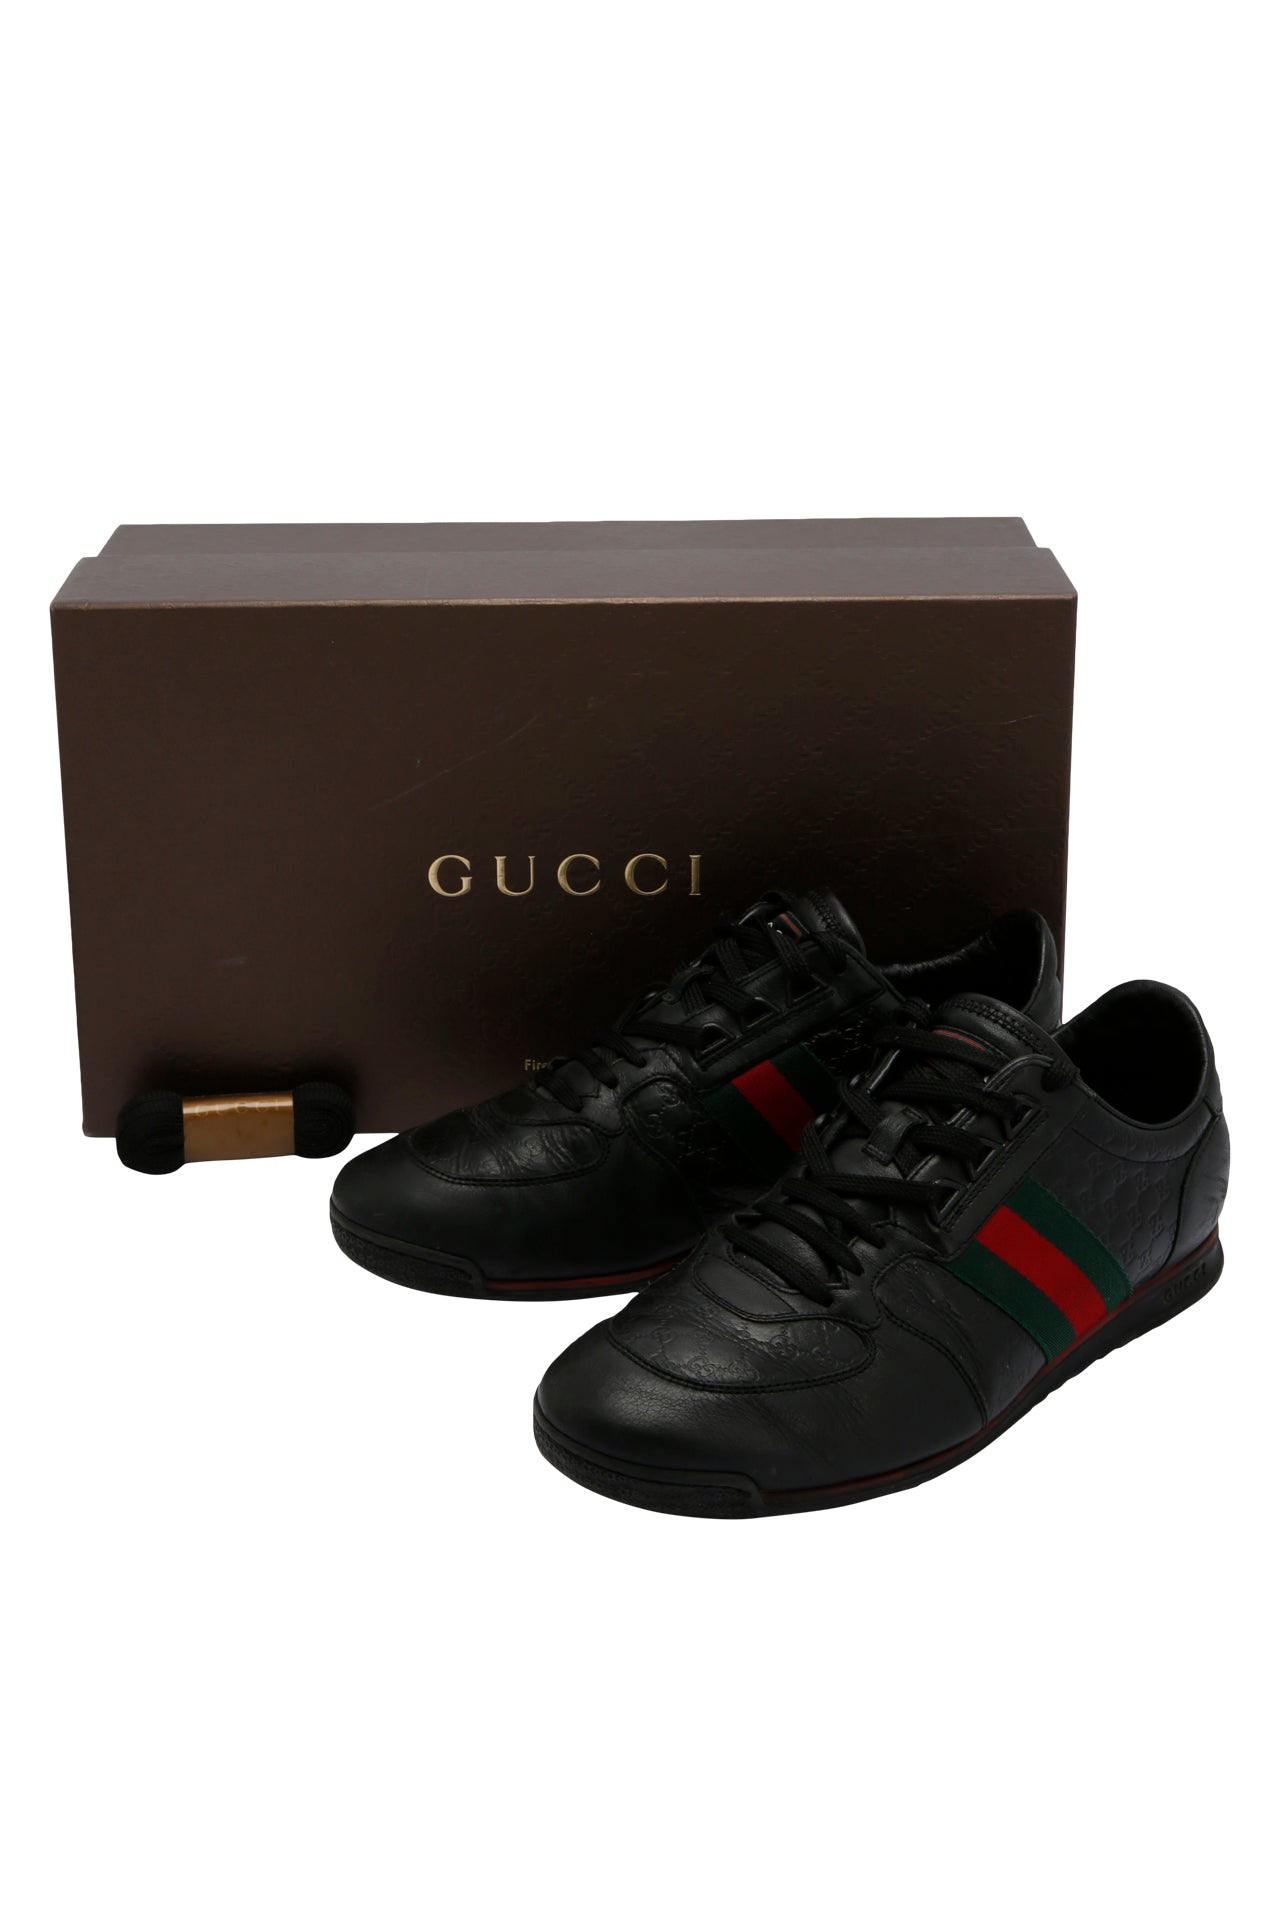 Gucci GG Web Sneakers Men